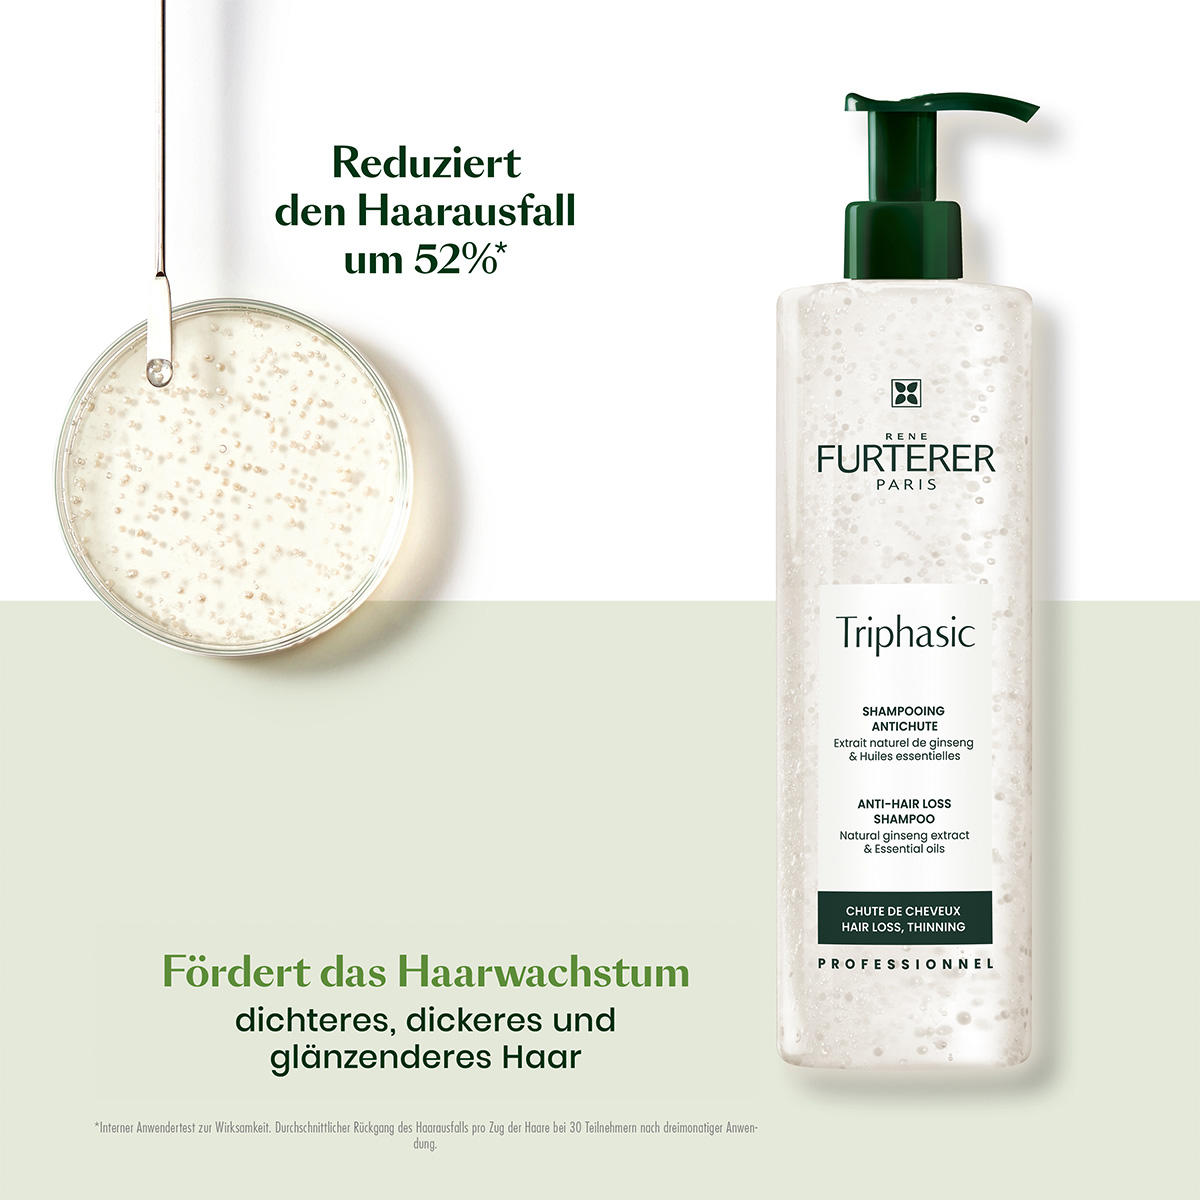 René Furterer Triphasic Shampoo bei Haarausfall 600 ml - 7